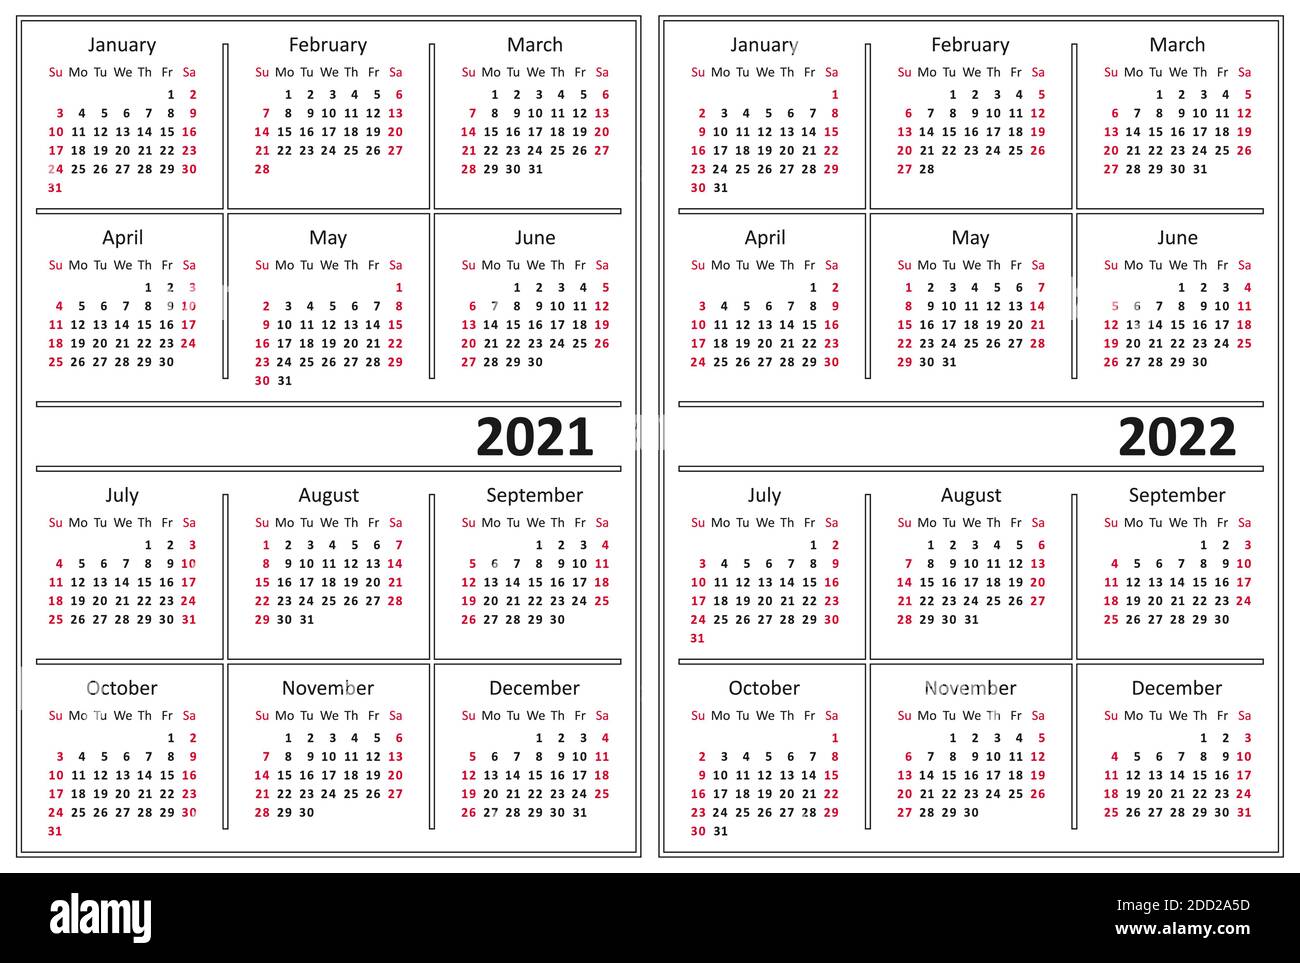 Template Of A Calendar Of White Color A Calendar For 2021 And 2022